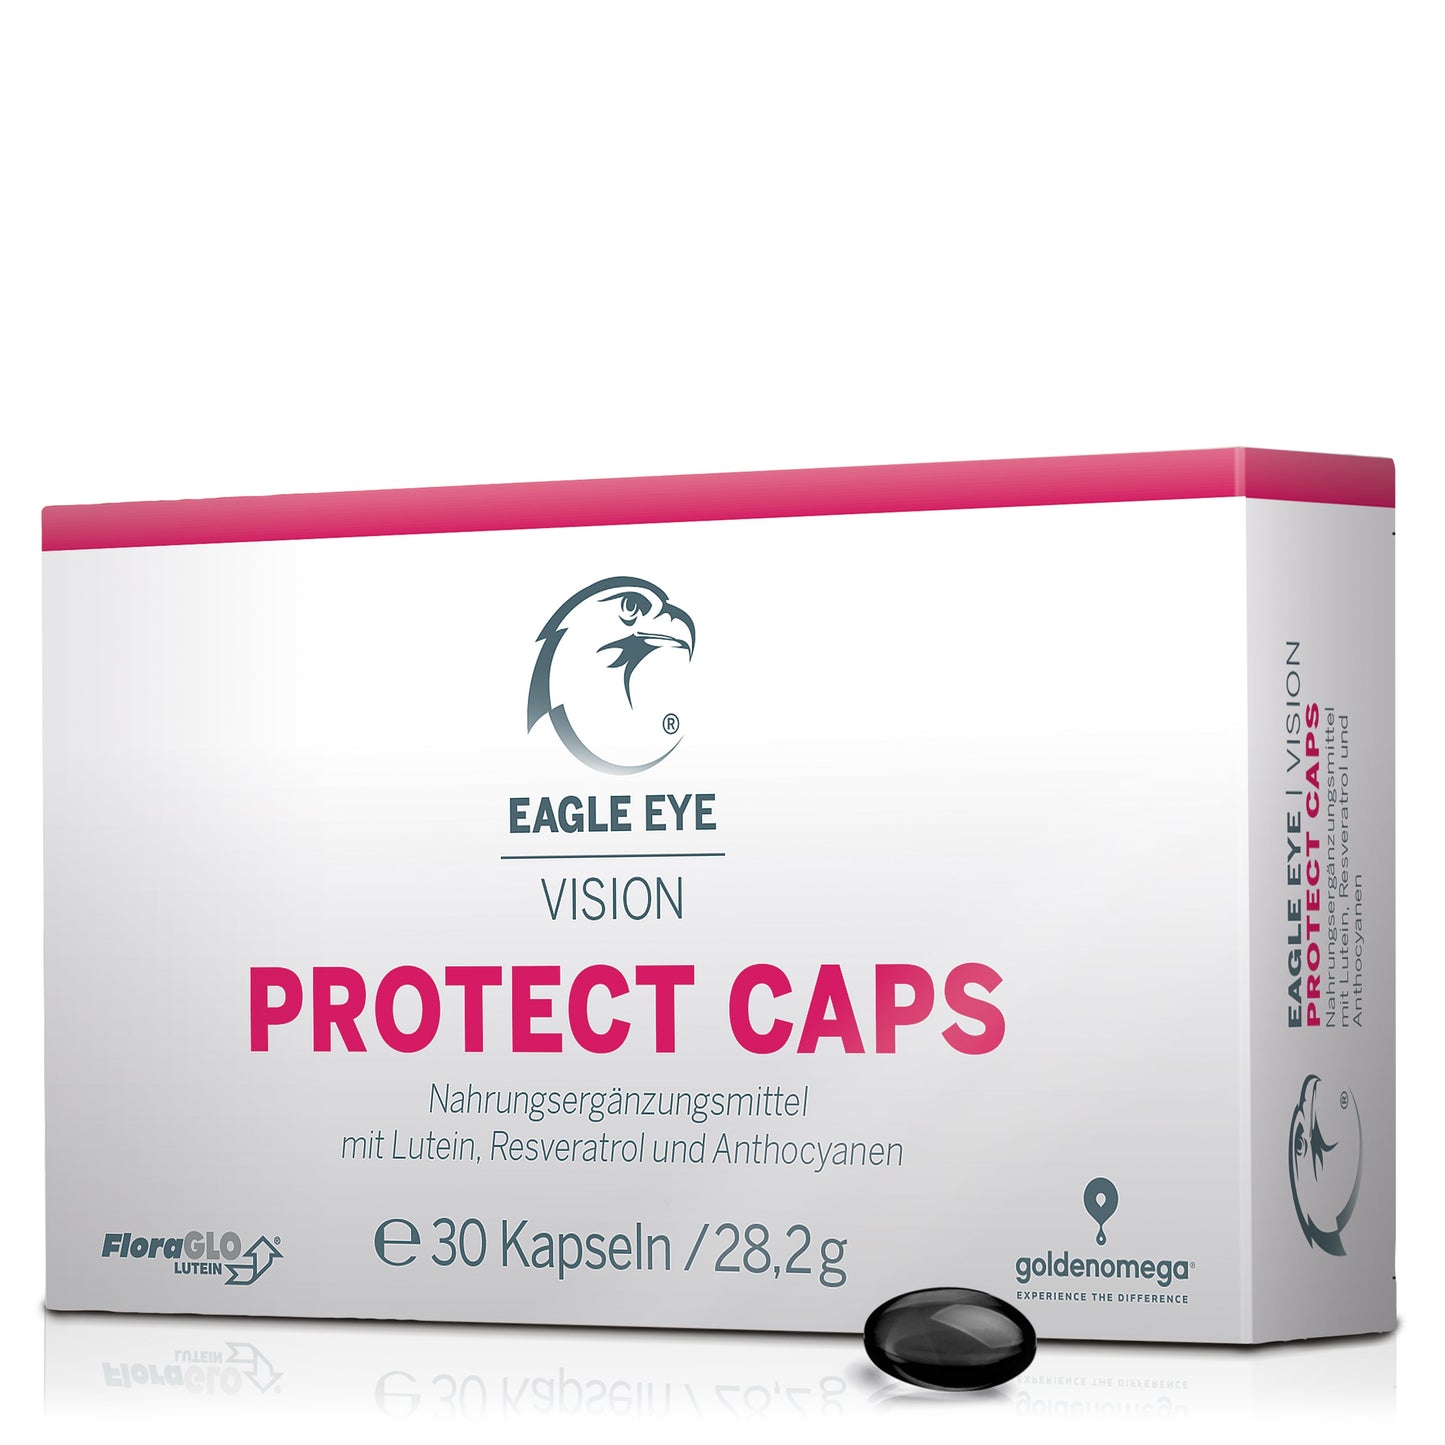 EAGLE EYE VISION PROTECT CAPS